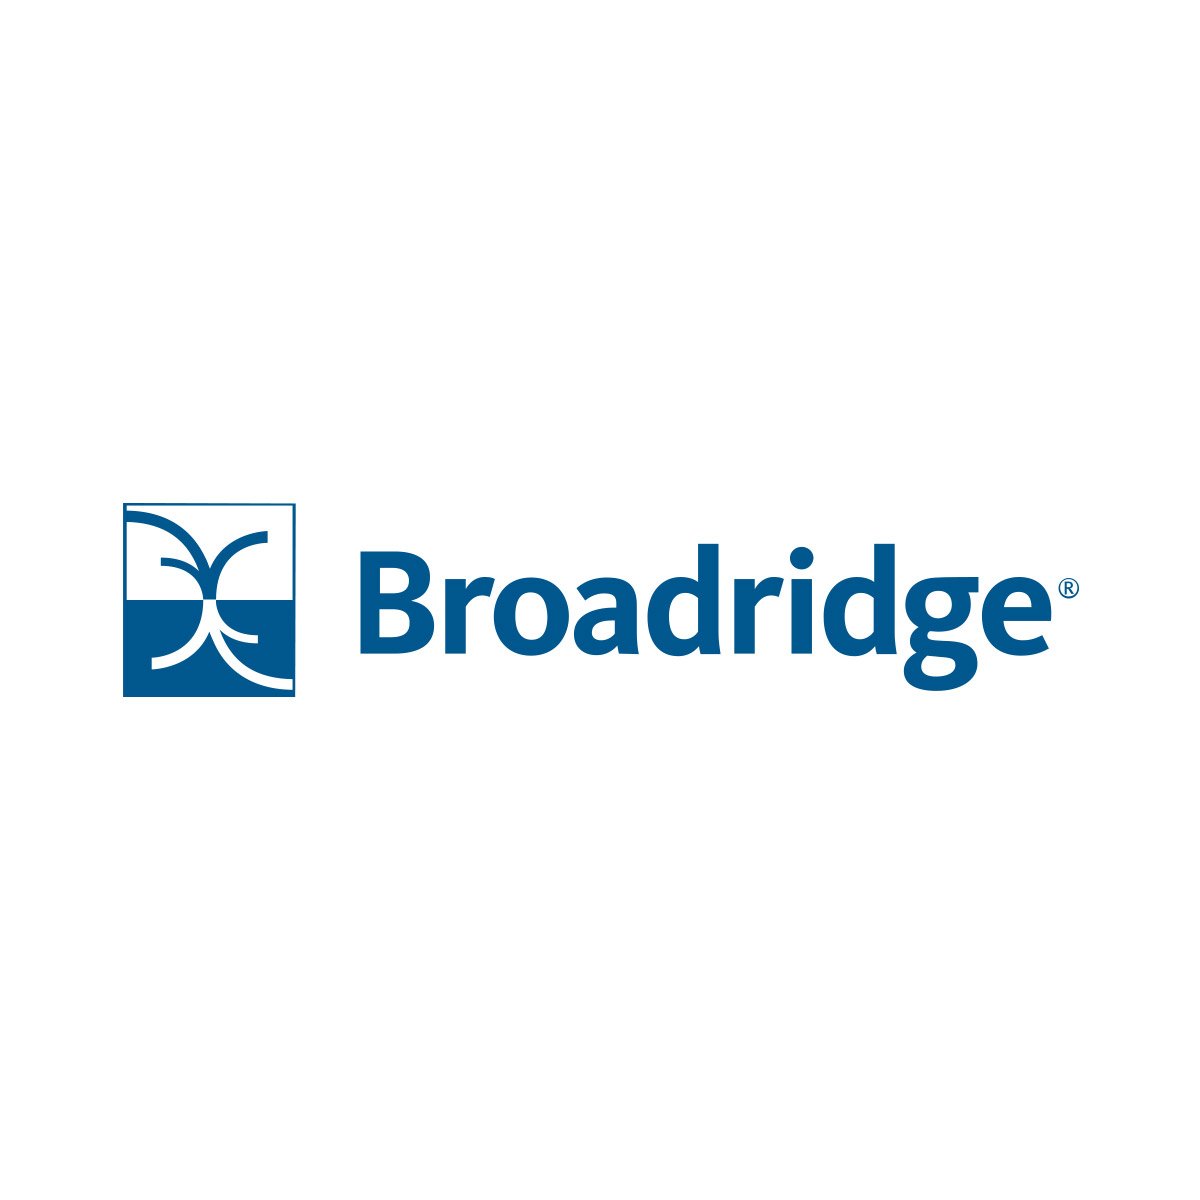 broadridge